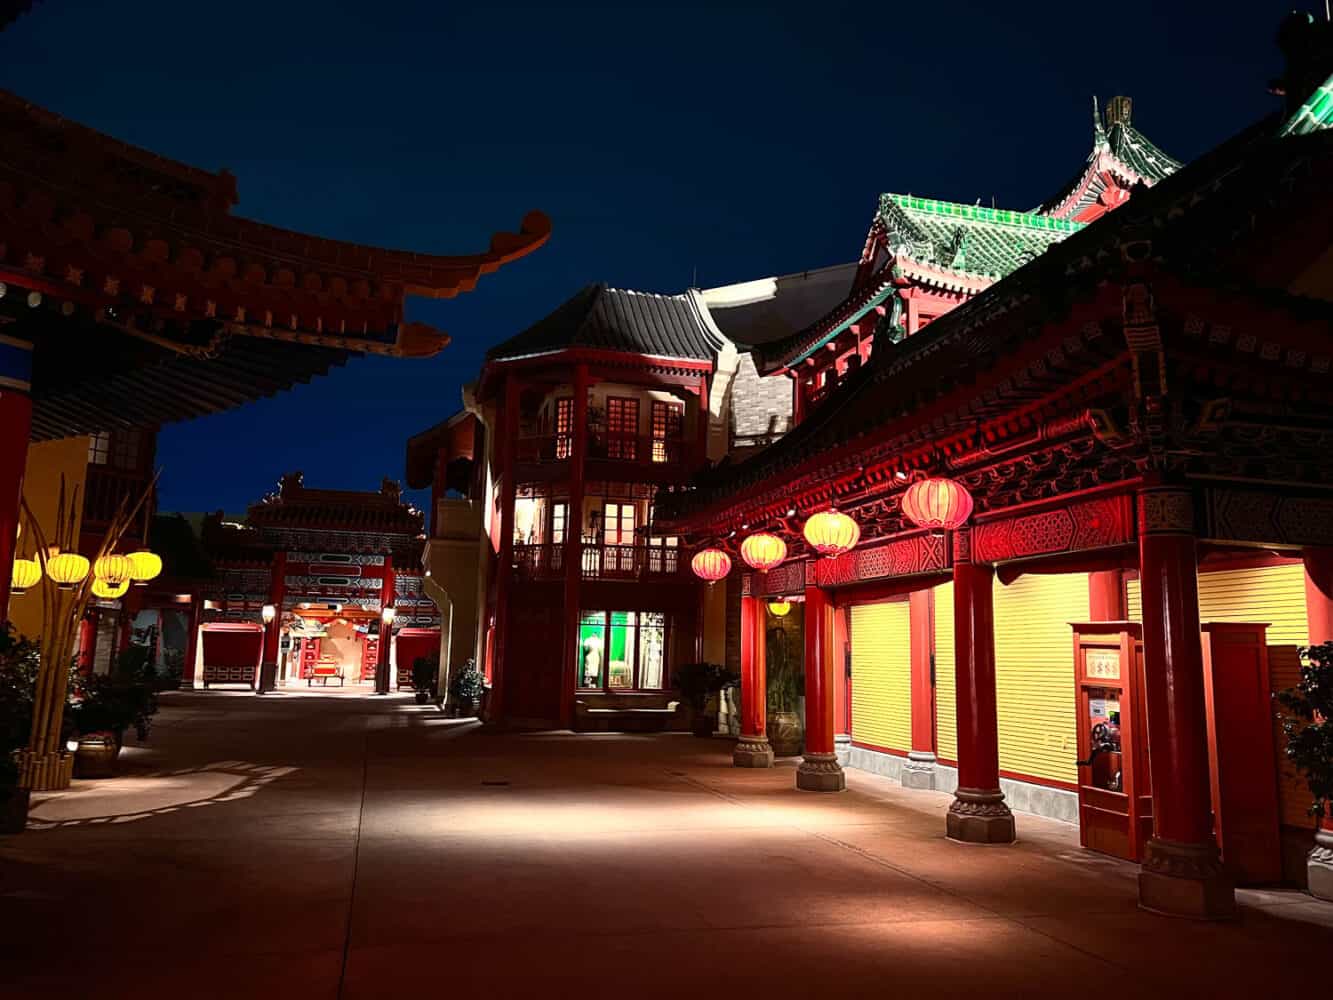 China Pavilion in the World Showcase at Epcot, Disney World Florida